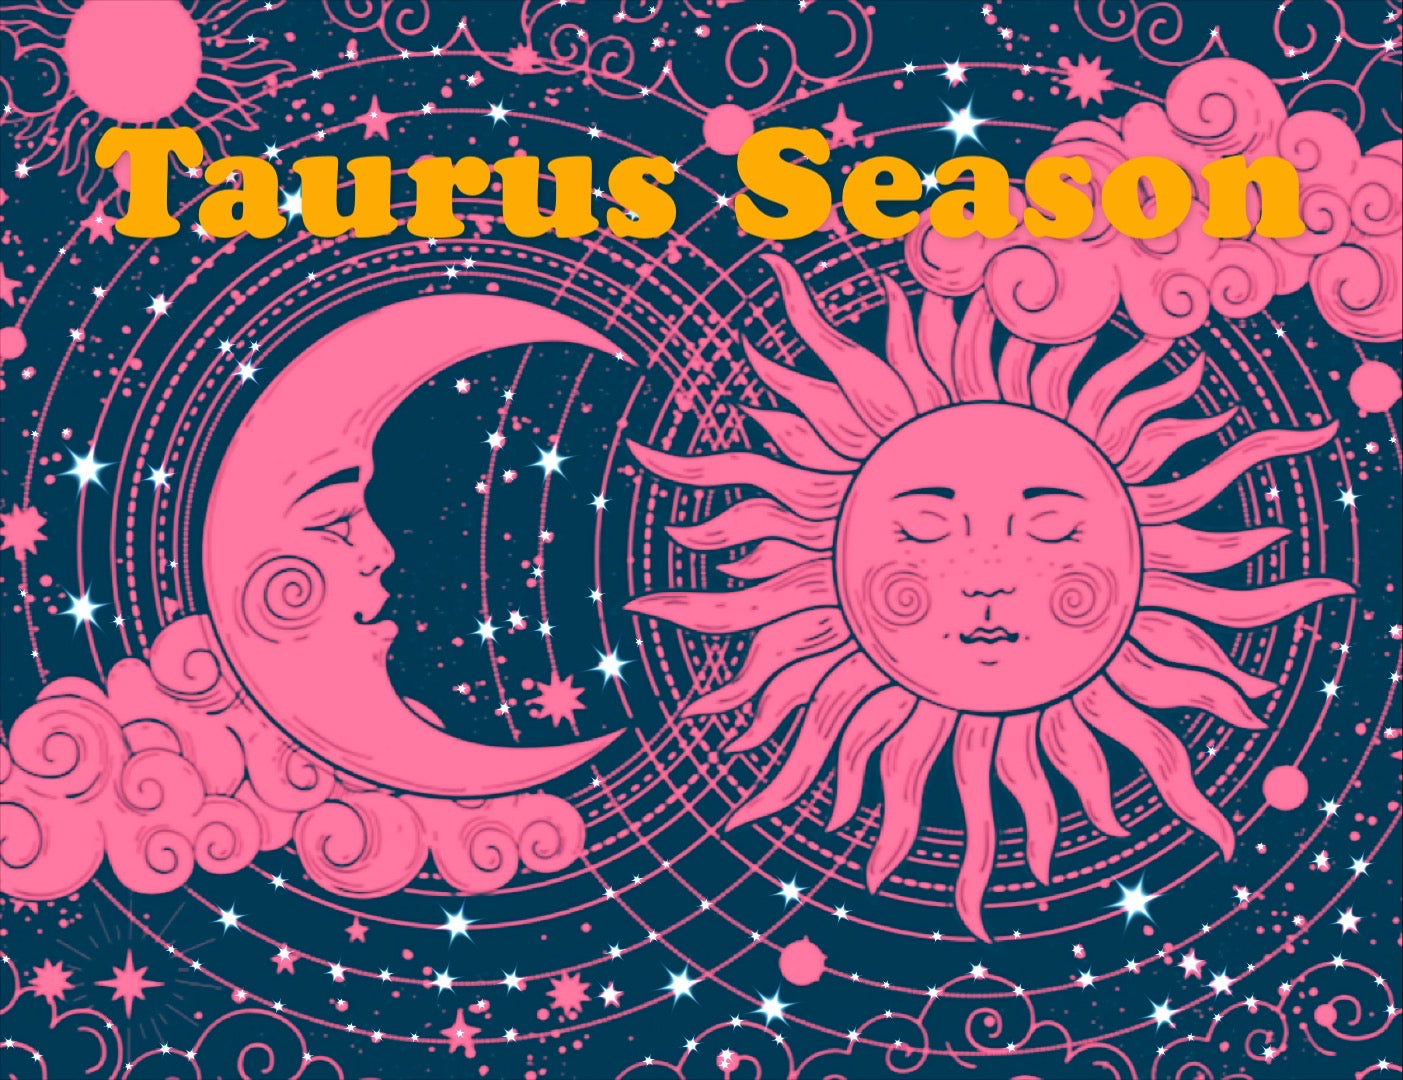 You Taurus Season Candle Horoscope